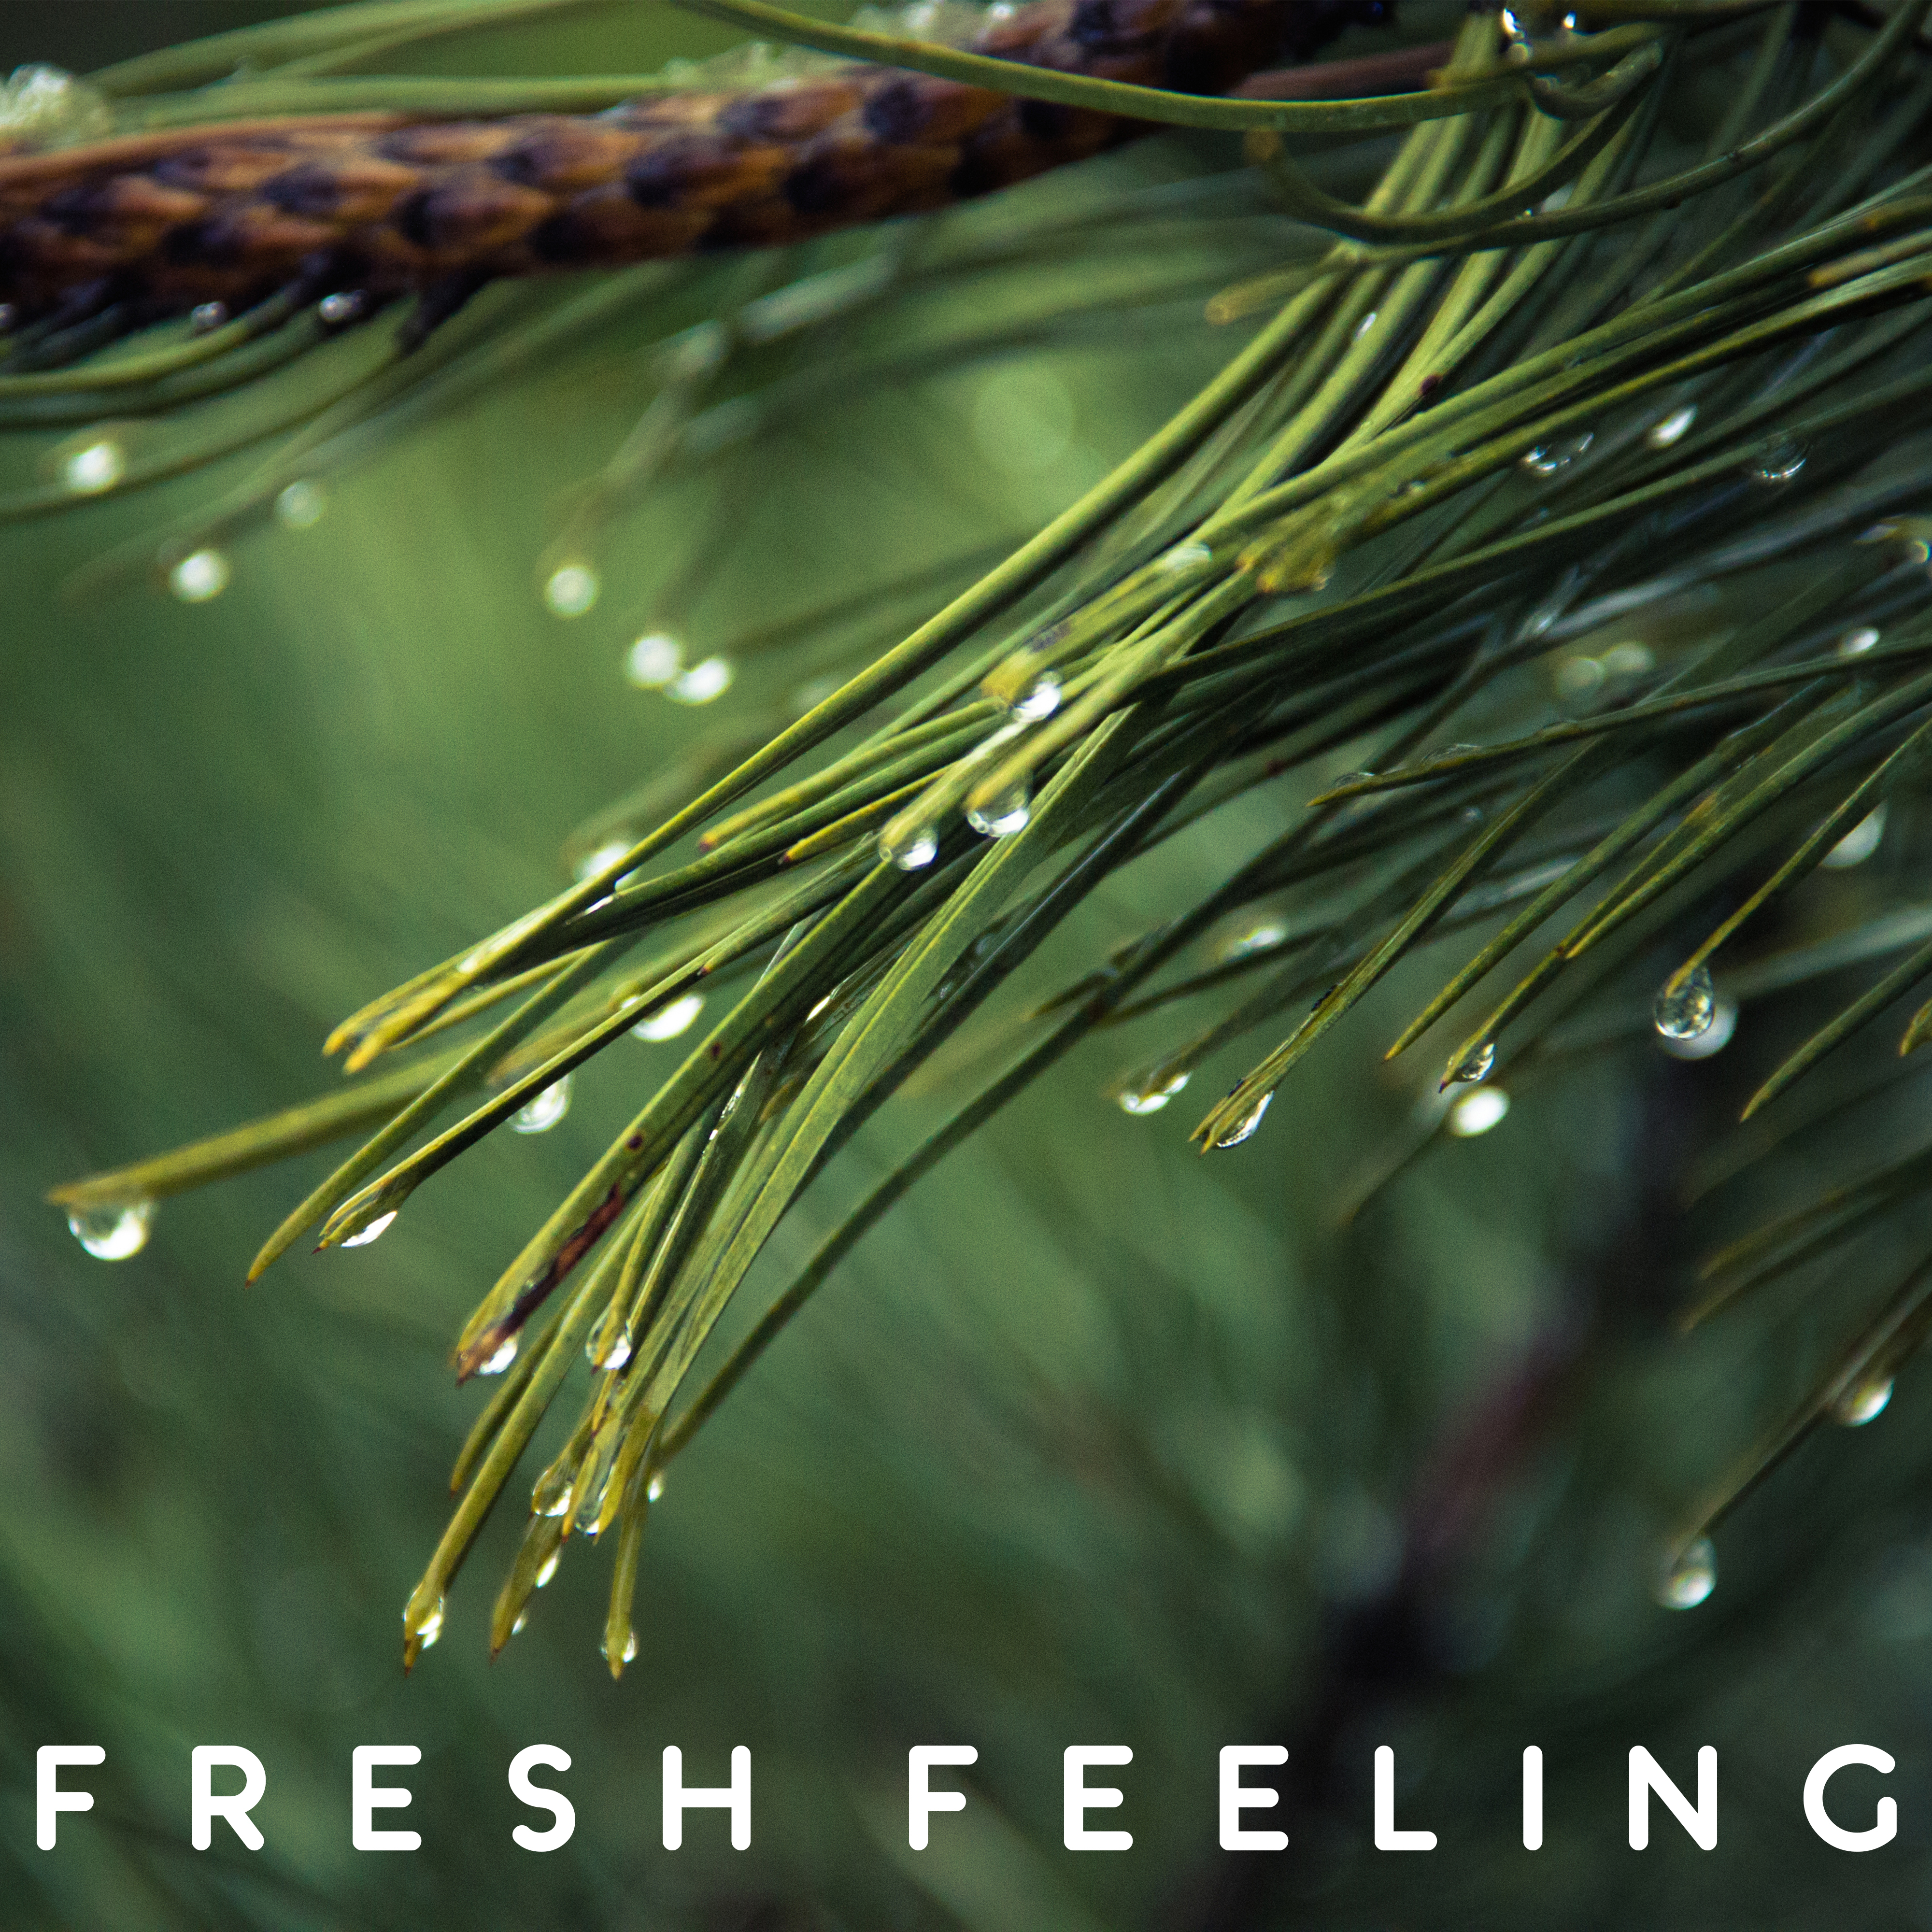 Fresh Feeling – Music for Meditation, Yoga Training, New Age Music, Sounds of Nature to Exercise, Healing Meditation